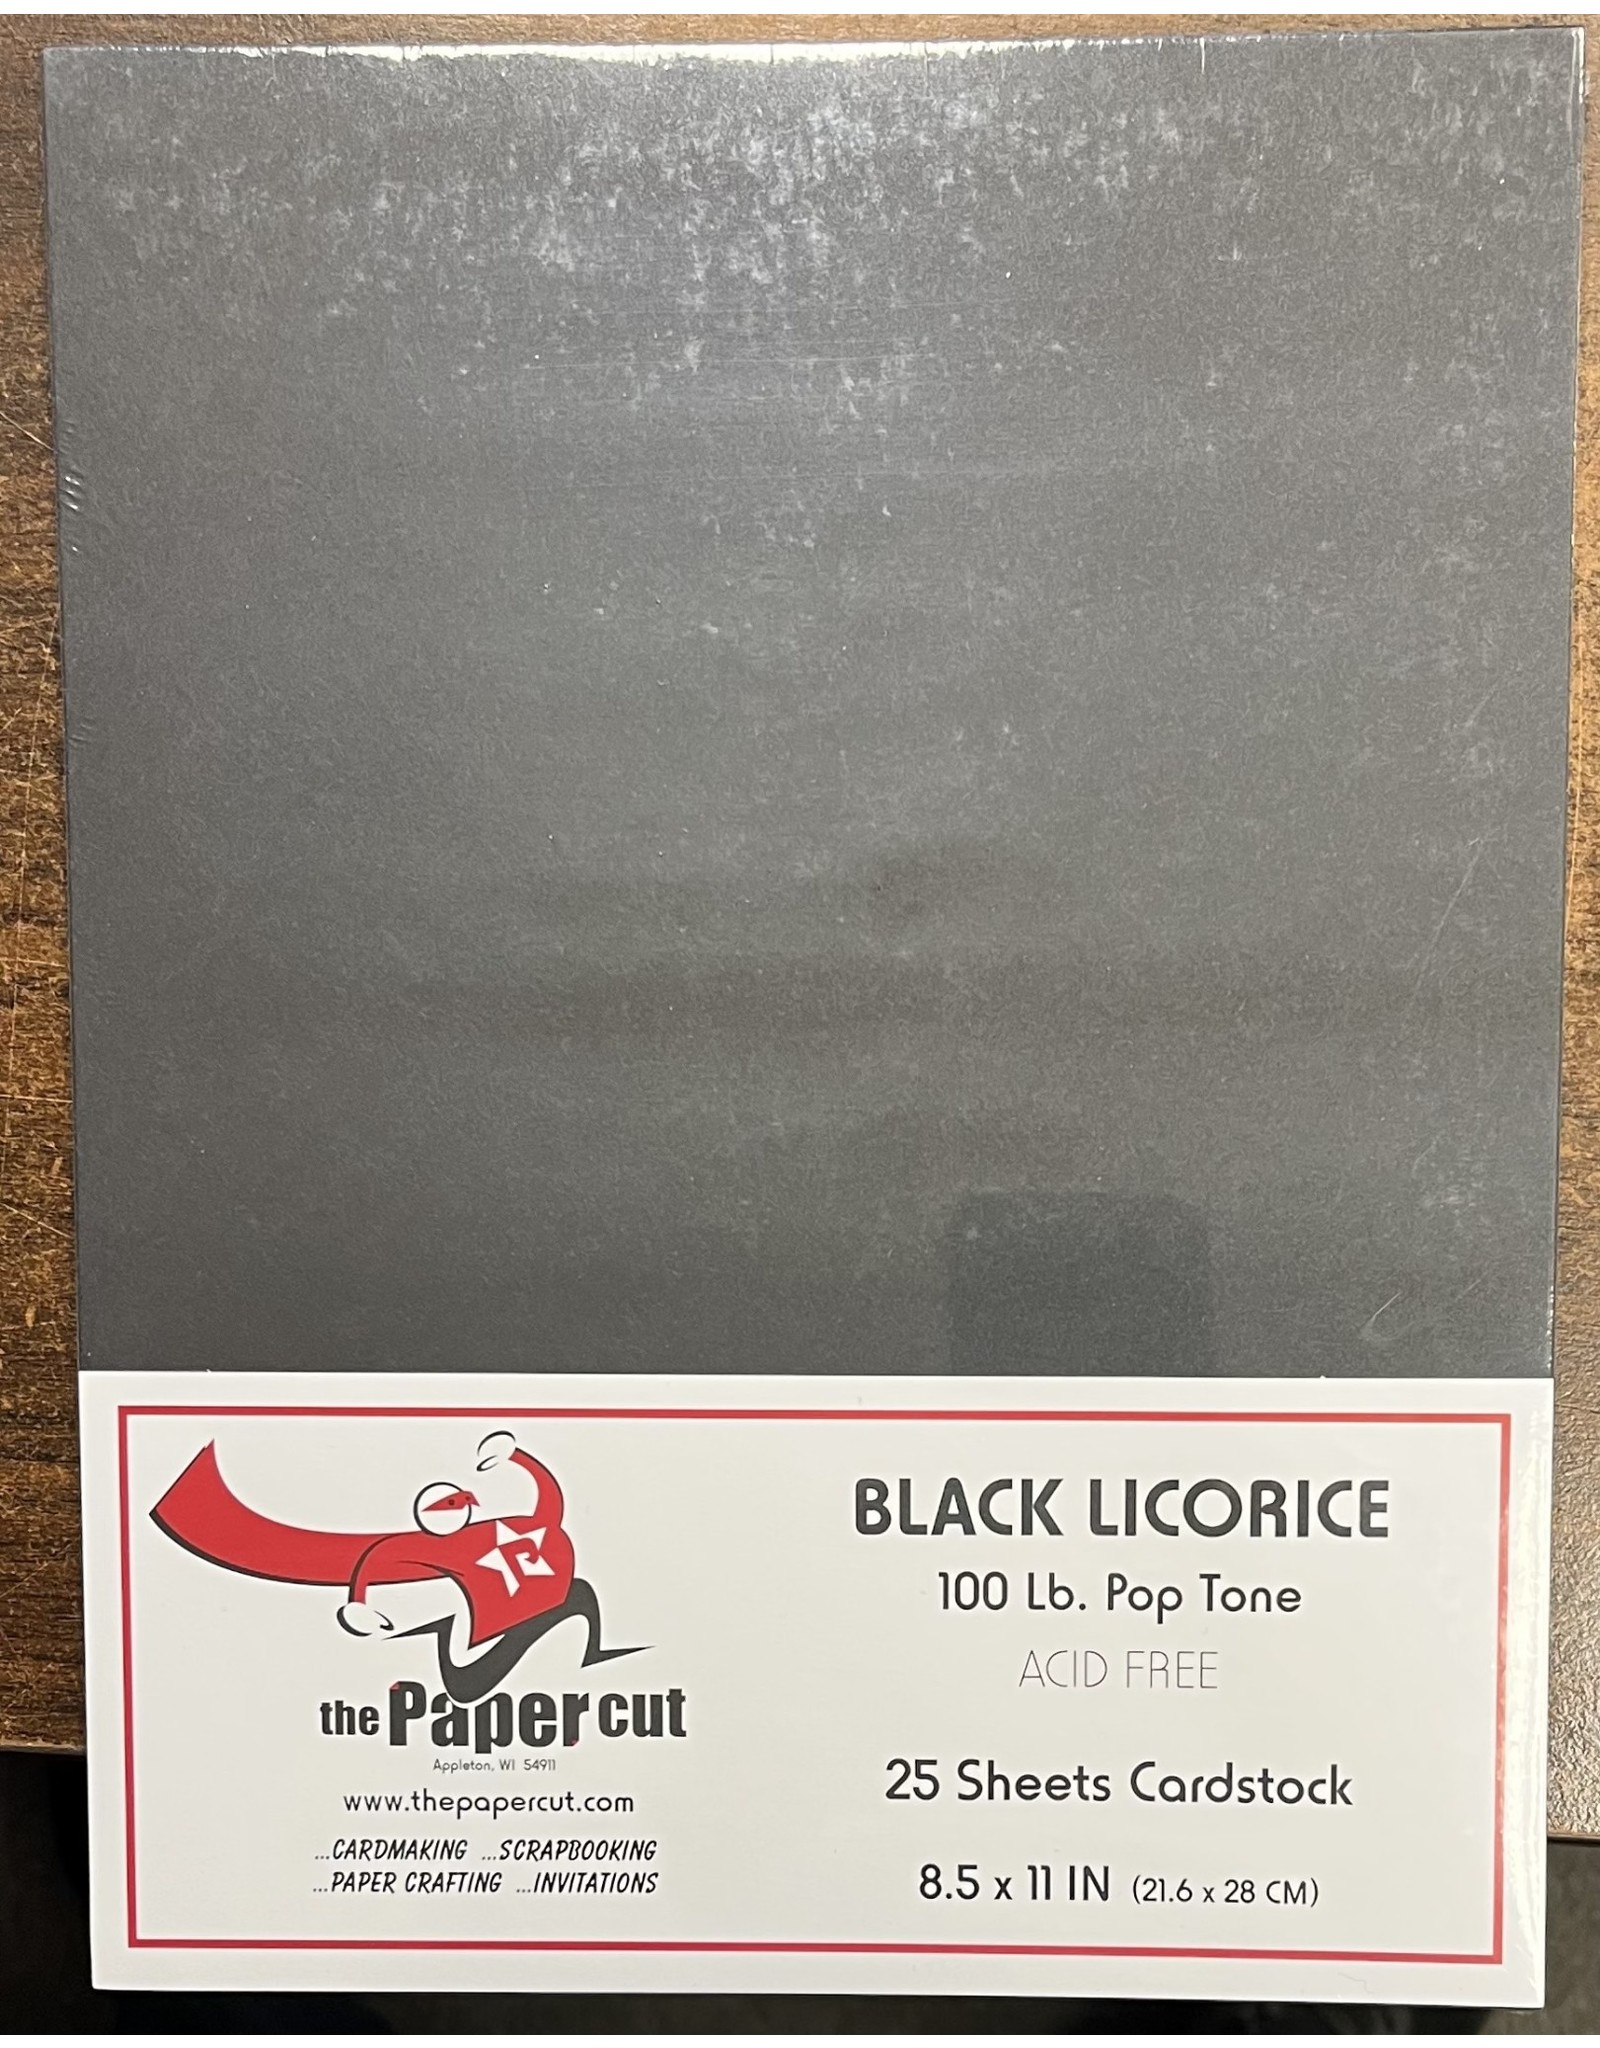 PAPER CUT THE PAPER CUT BLACK LICORICE 100lb POPTONE CARDSTOCK 8.5x11 25 SHEETS